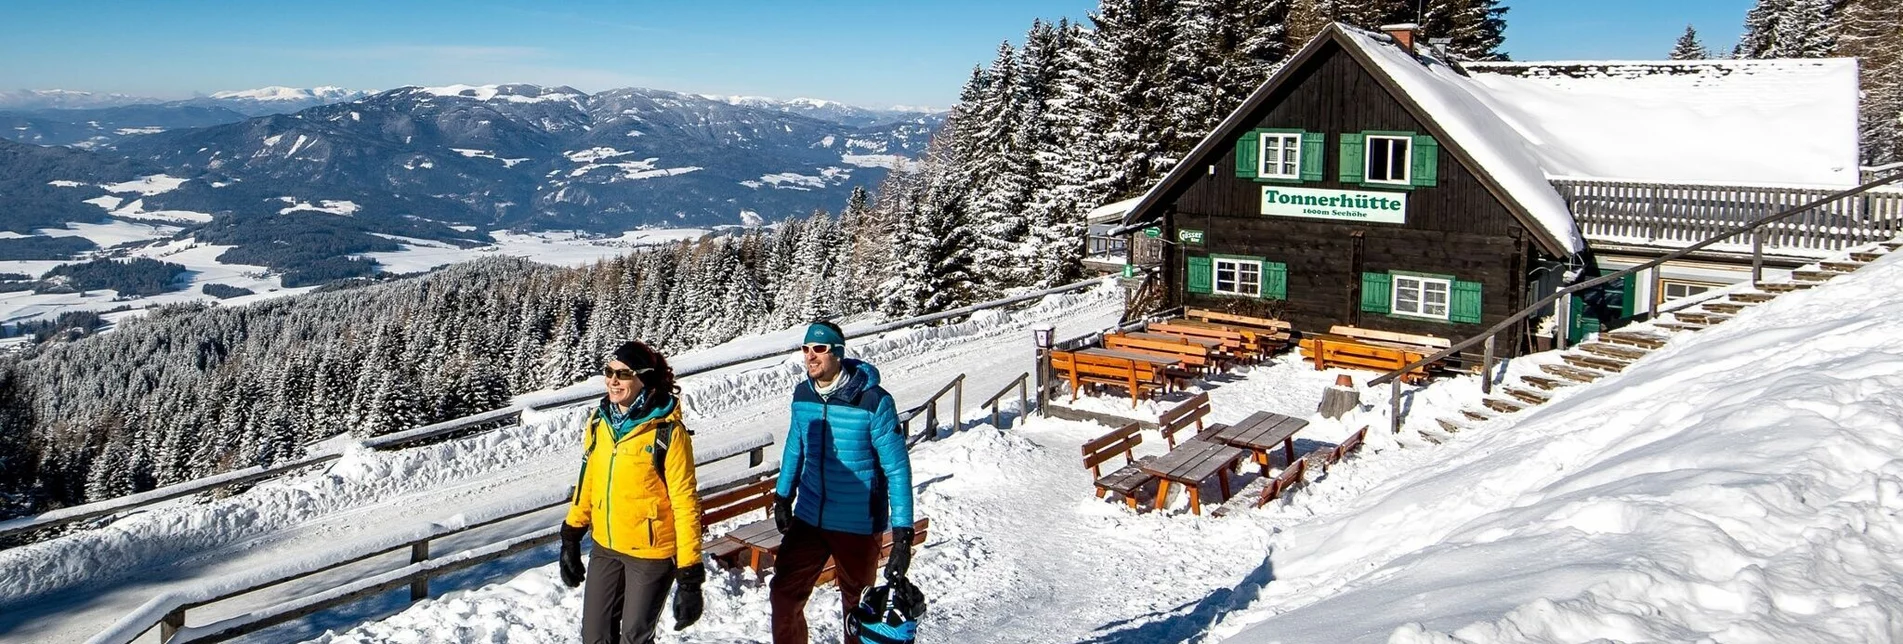 Winterwandern Panoramaweg Tonnerhütte - Touren-Impression #1 | © Tourismusverband Region Murau